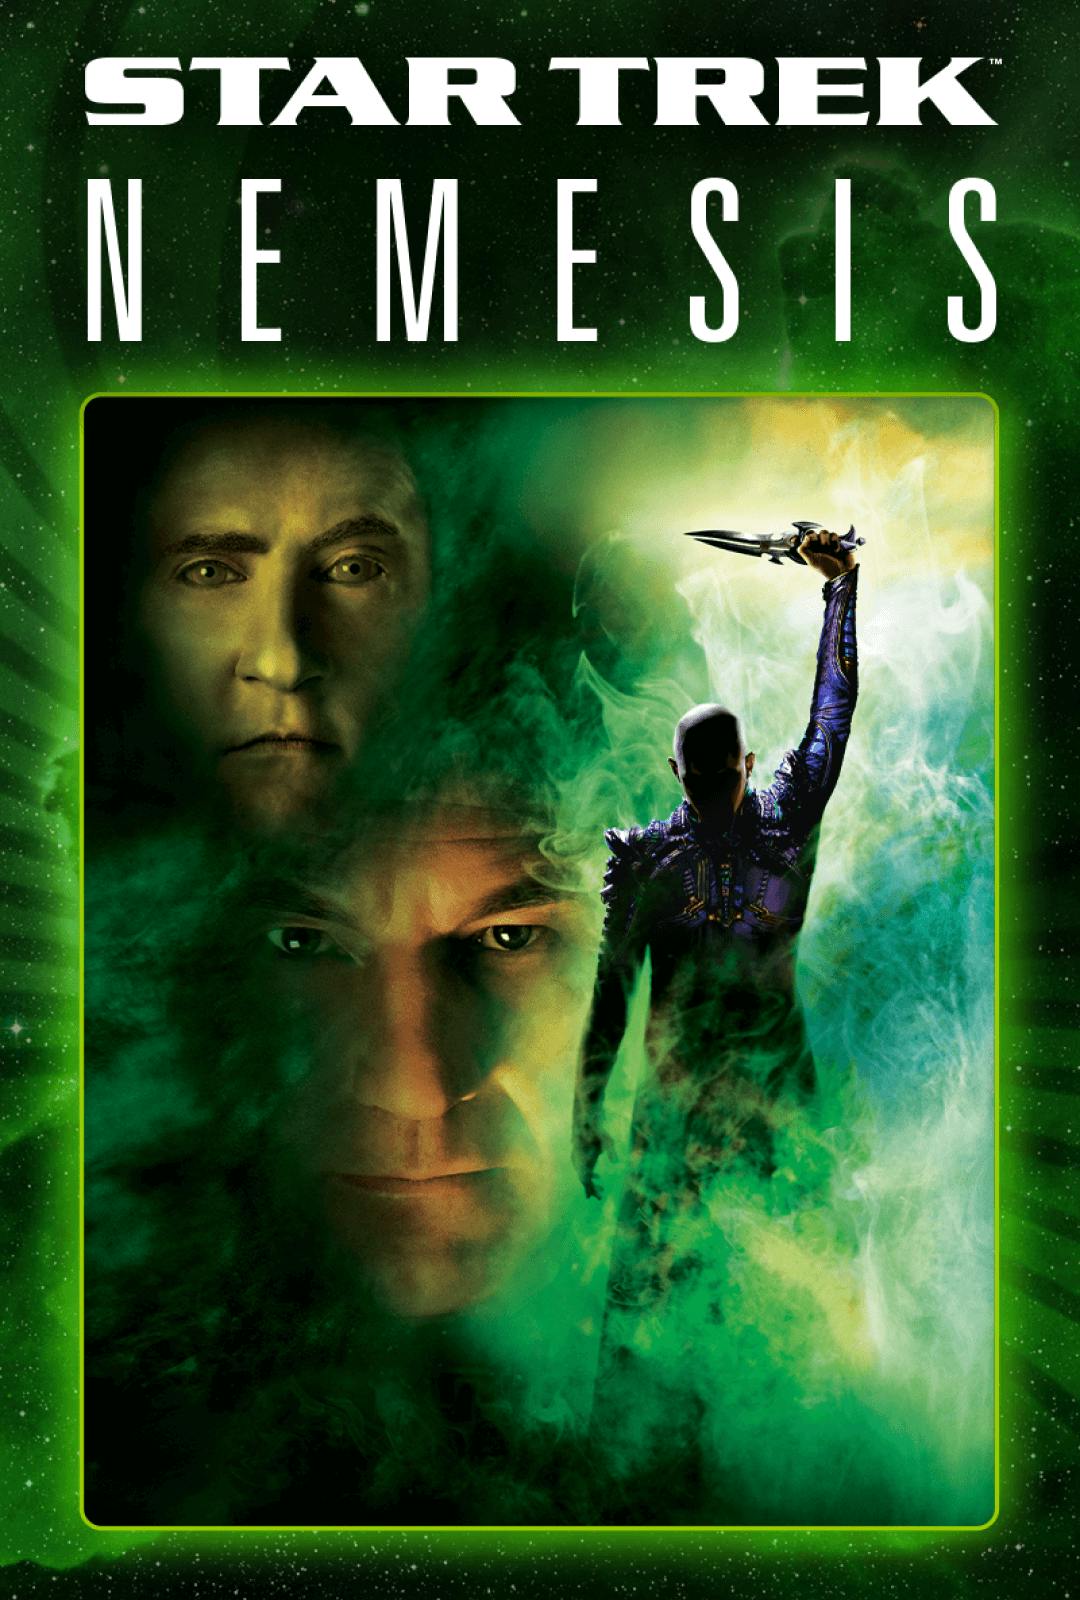 Poster art for Star Trek: Nemesis featuring Jean-Luc Picard, Data and Praetor Shinzon